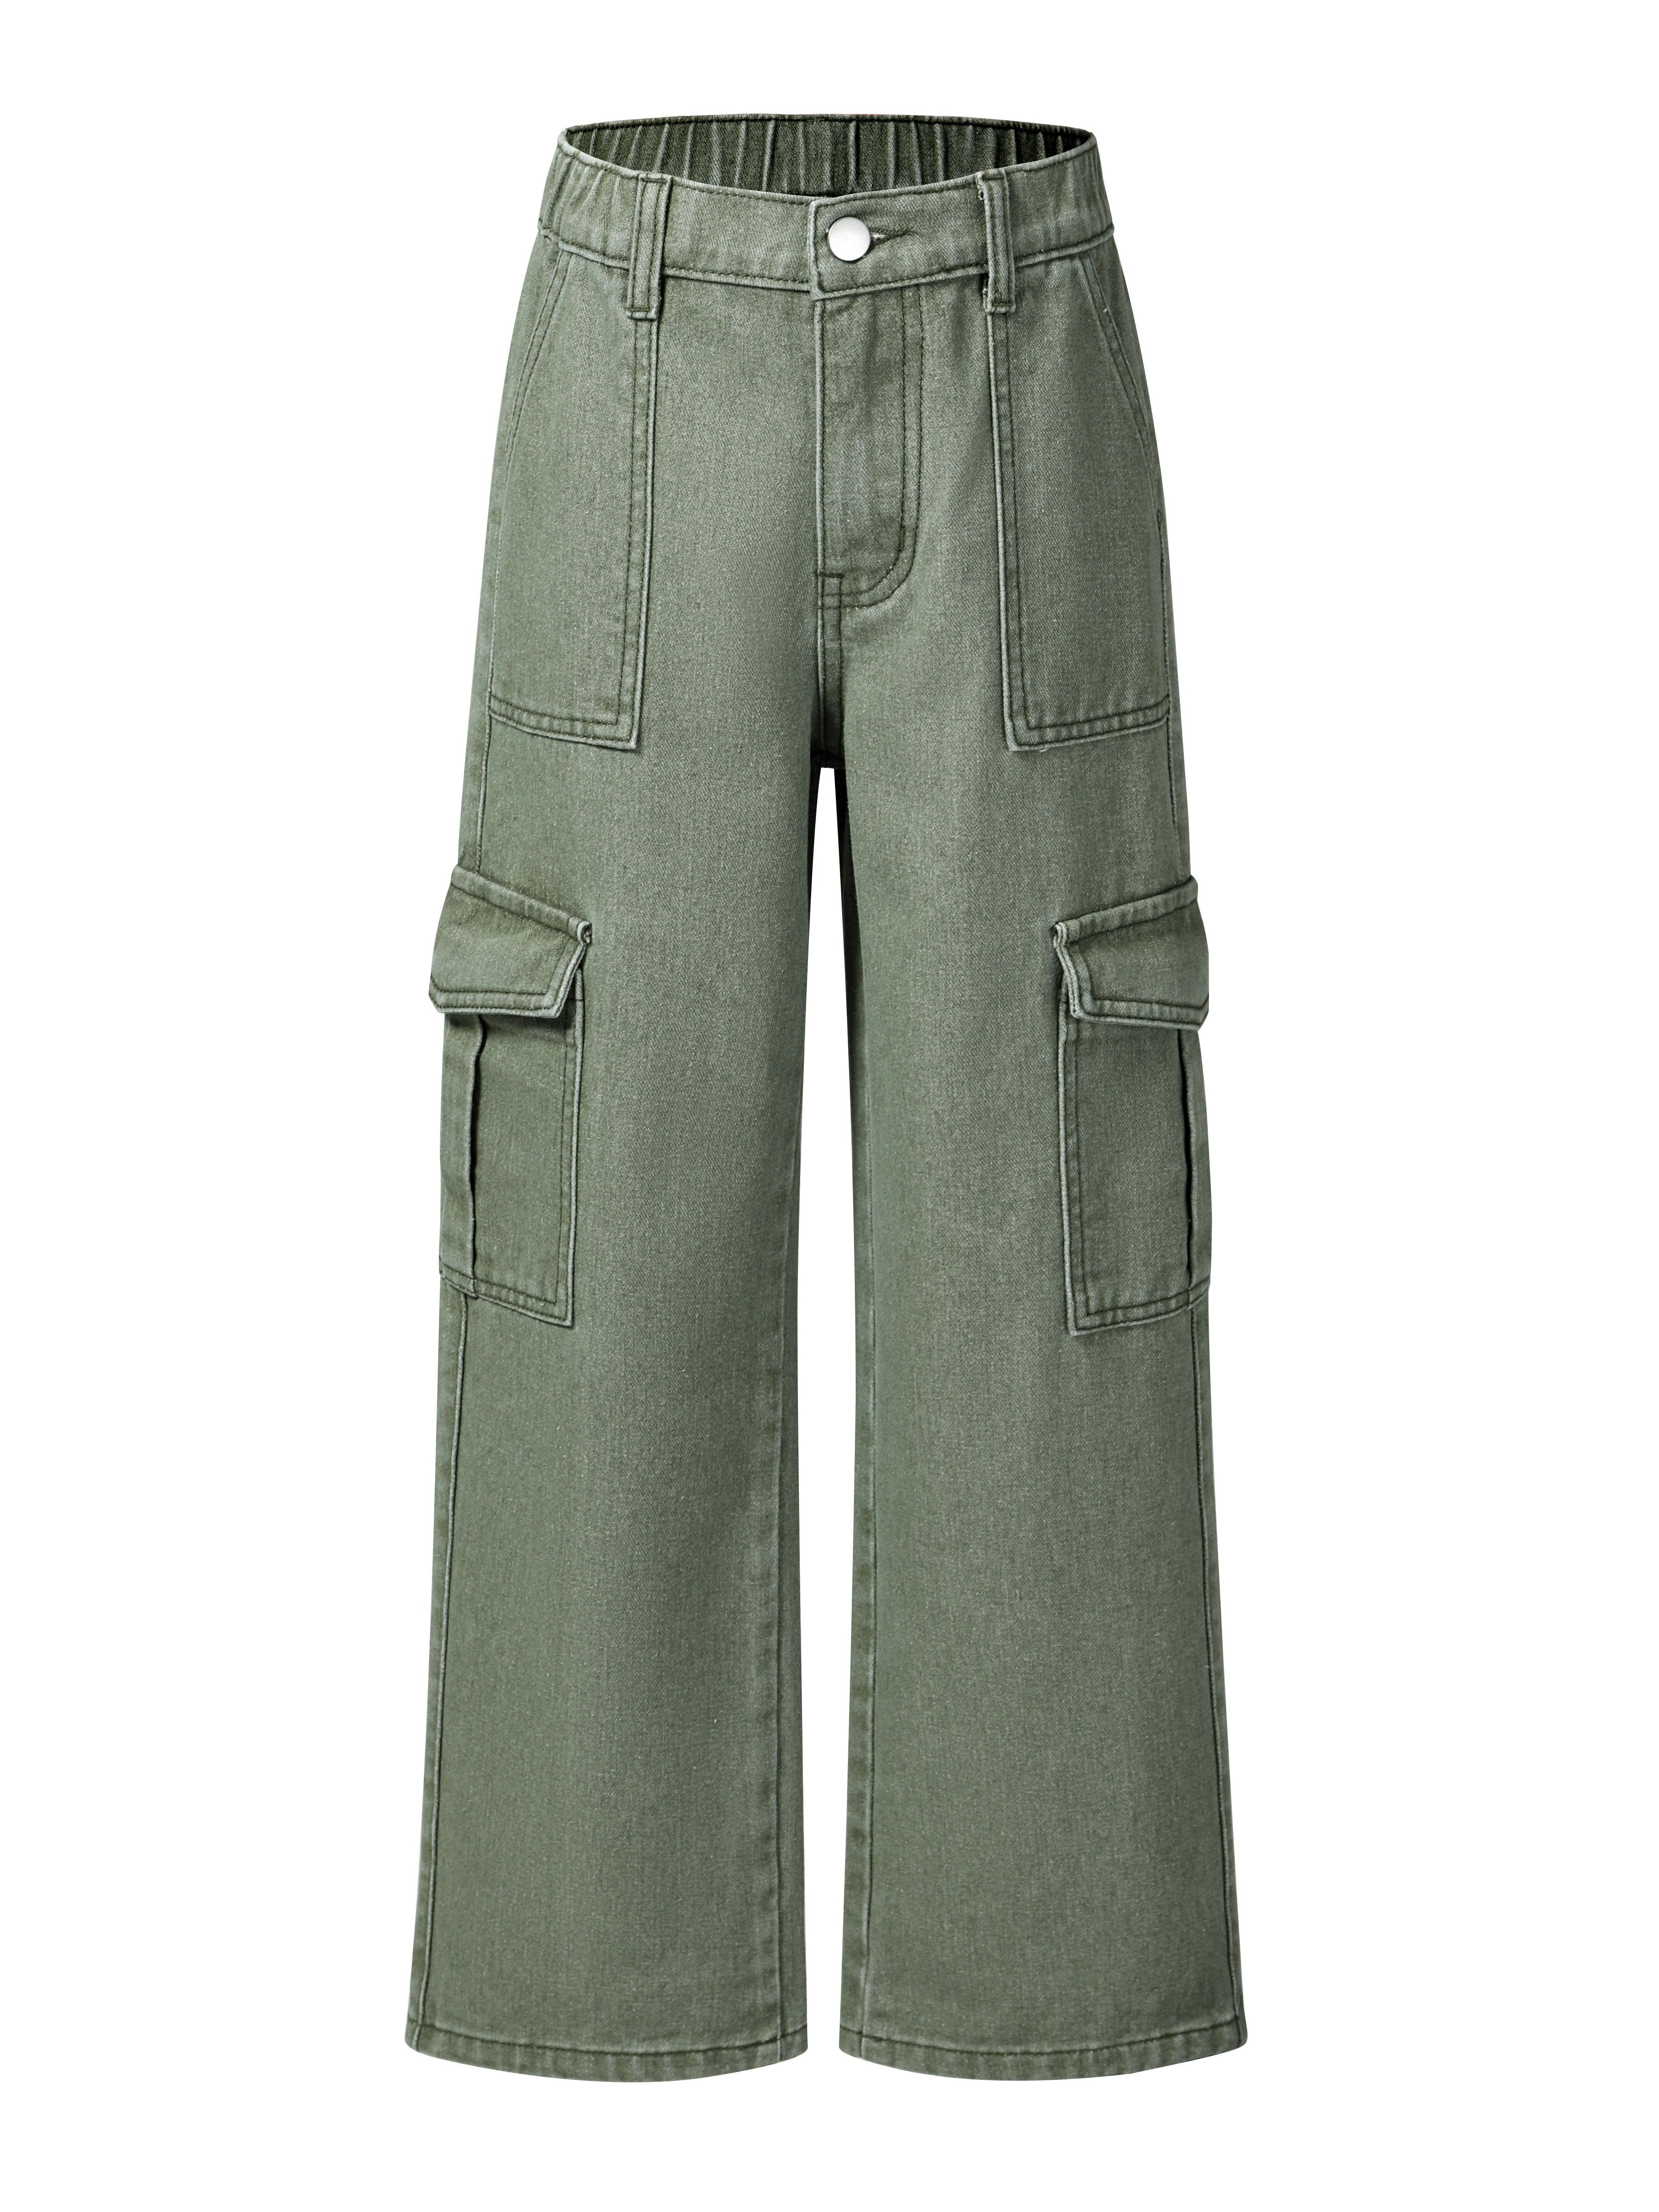 Teens Girls Trend Armygreen Cargo Pants Elastic Waist Flap Pockets  Trousers, Girl's Clothes